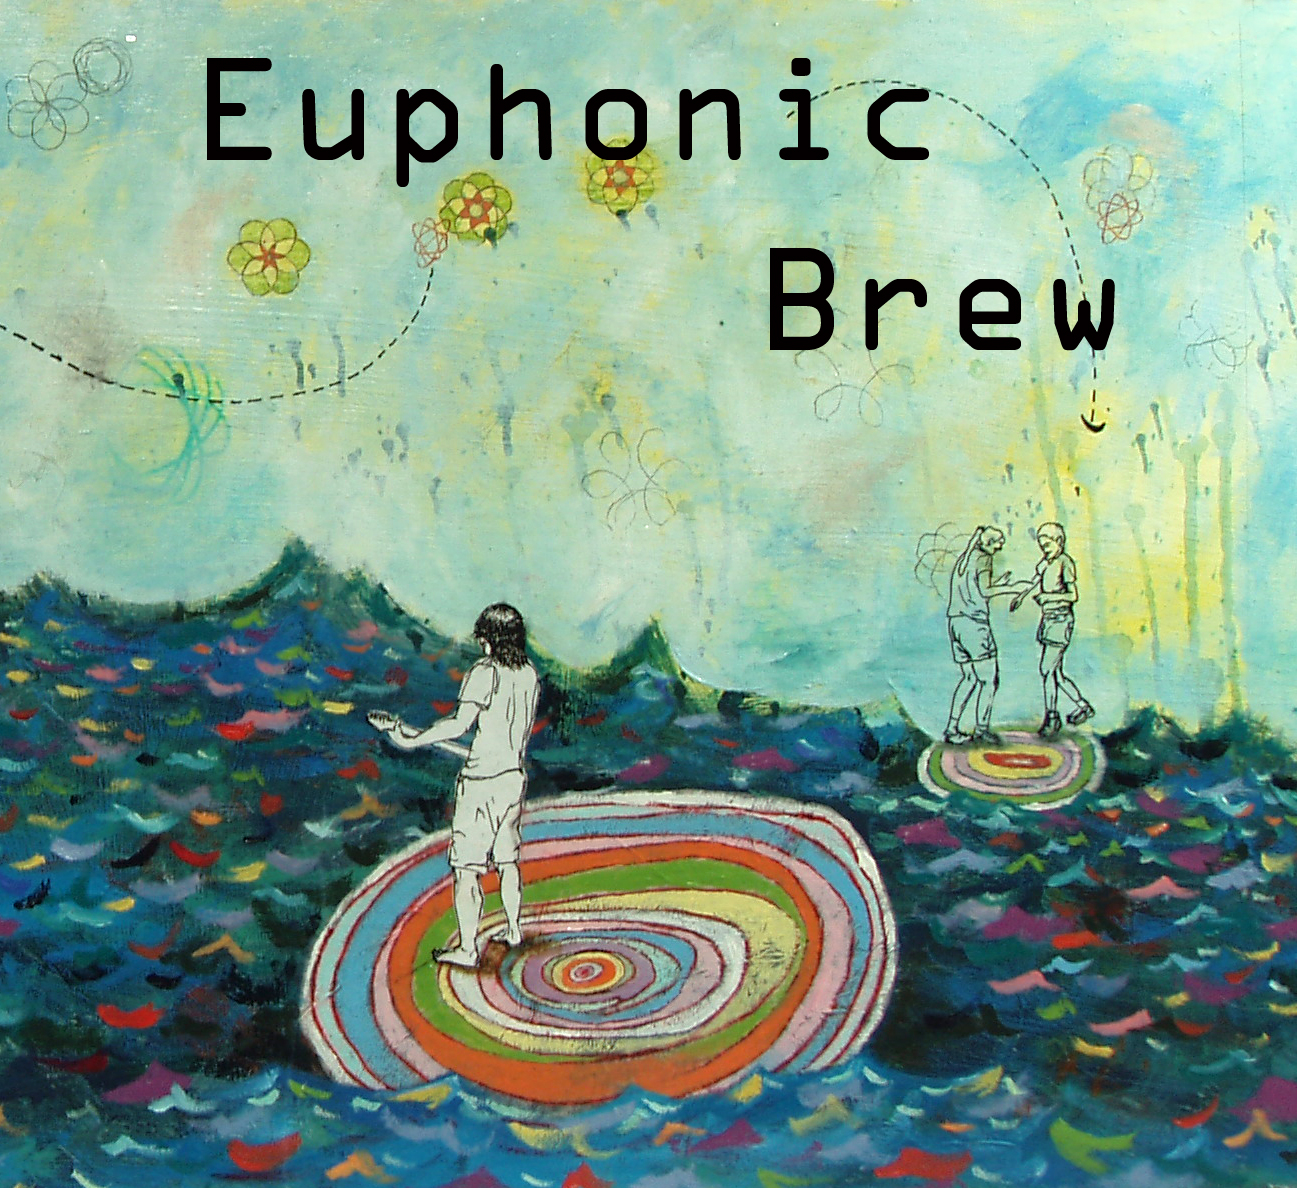 Euphonic Brew Album Art, front